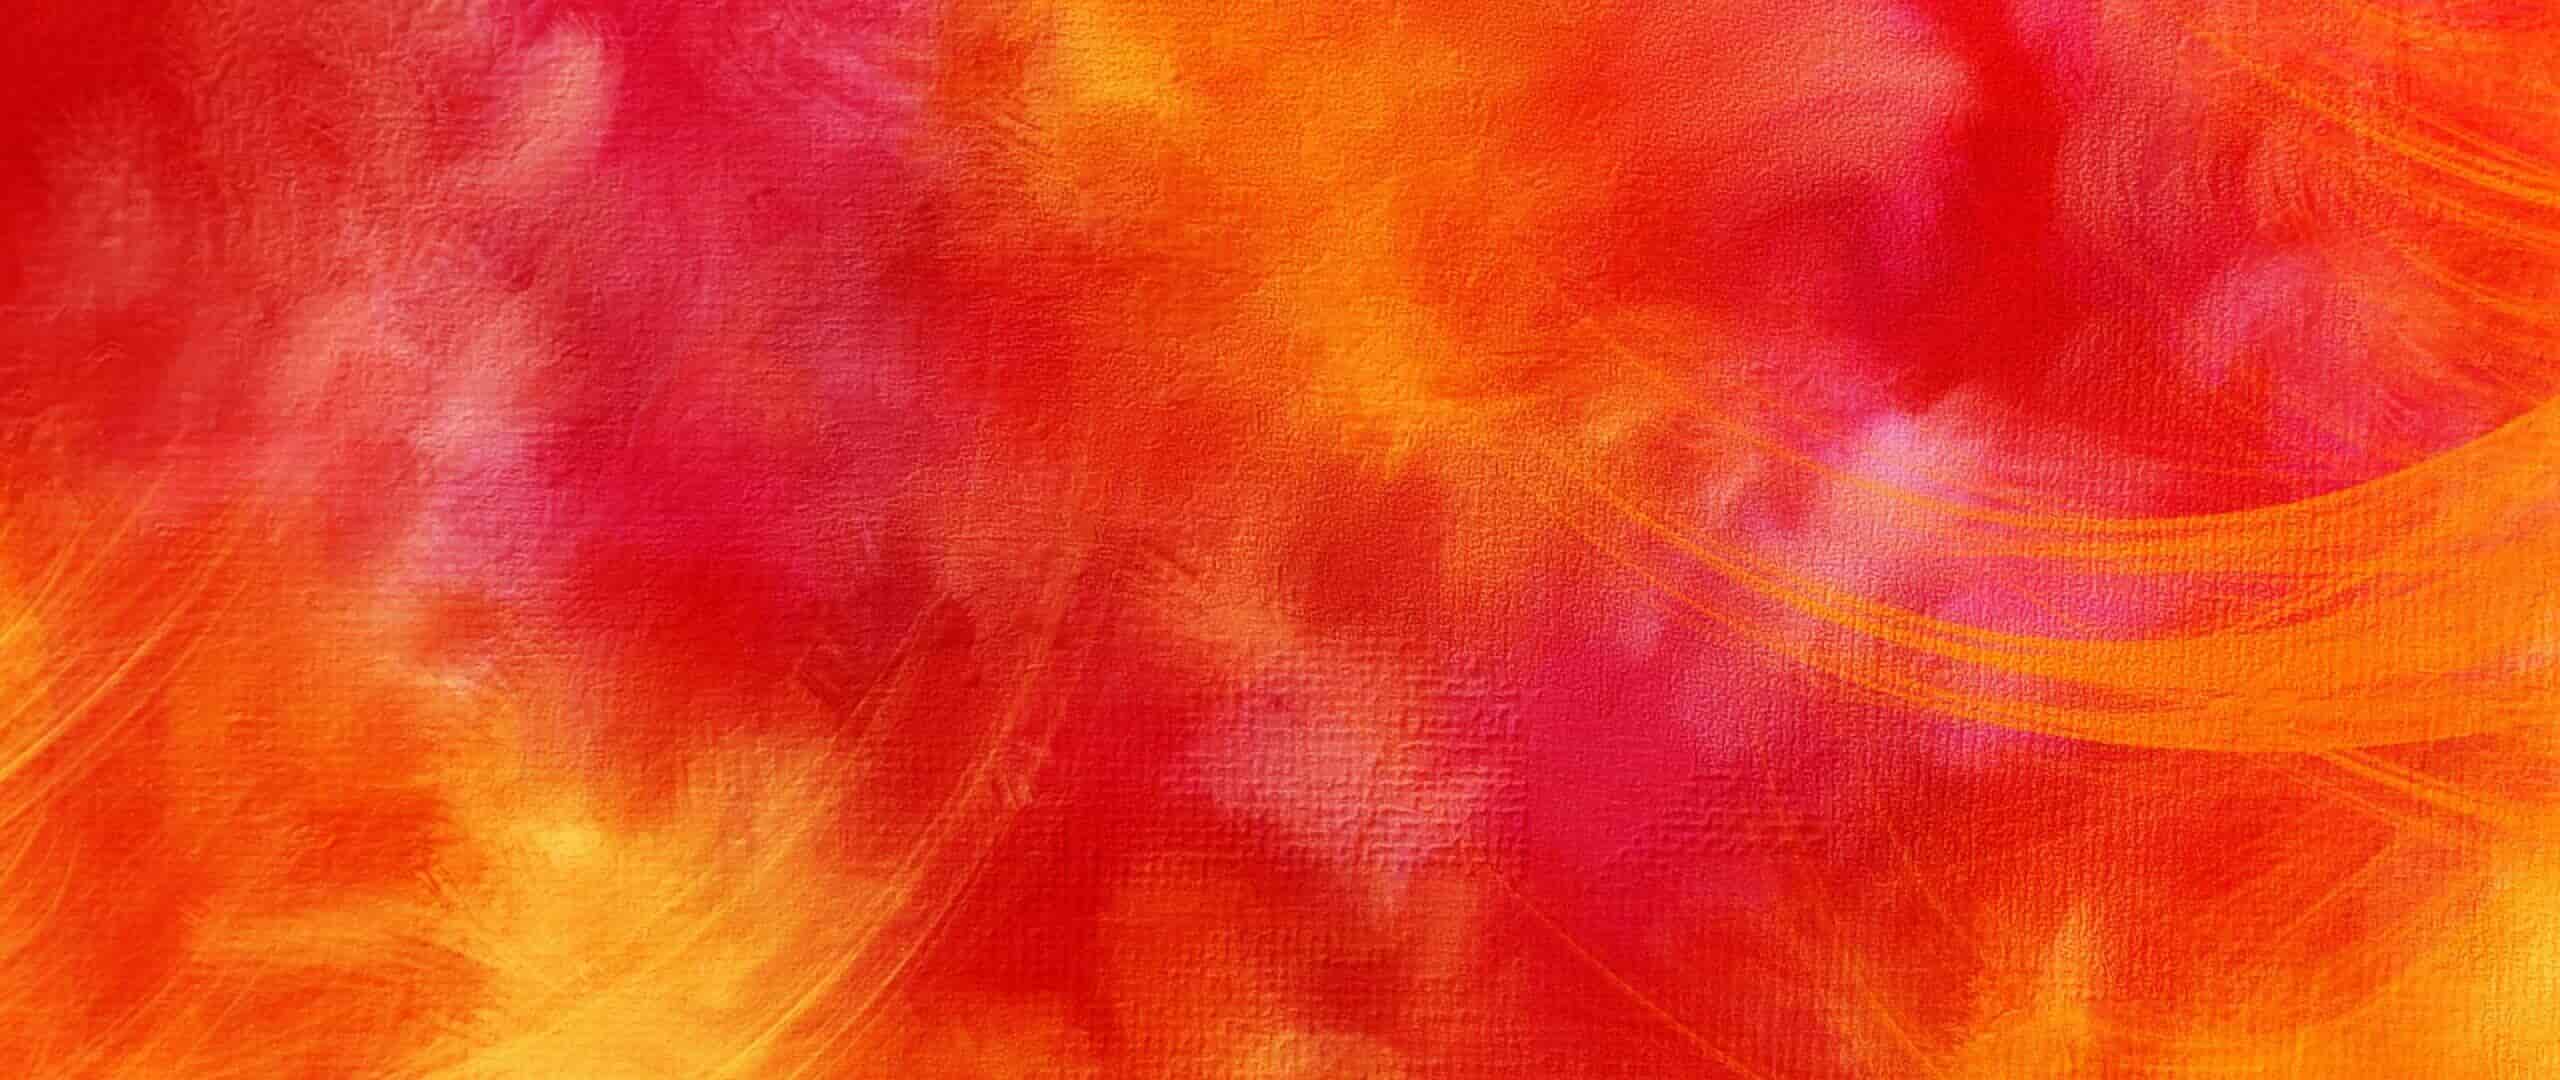 Red-And-Orange-Wallpaper-7.jpg